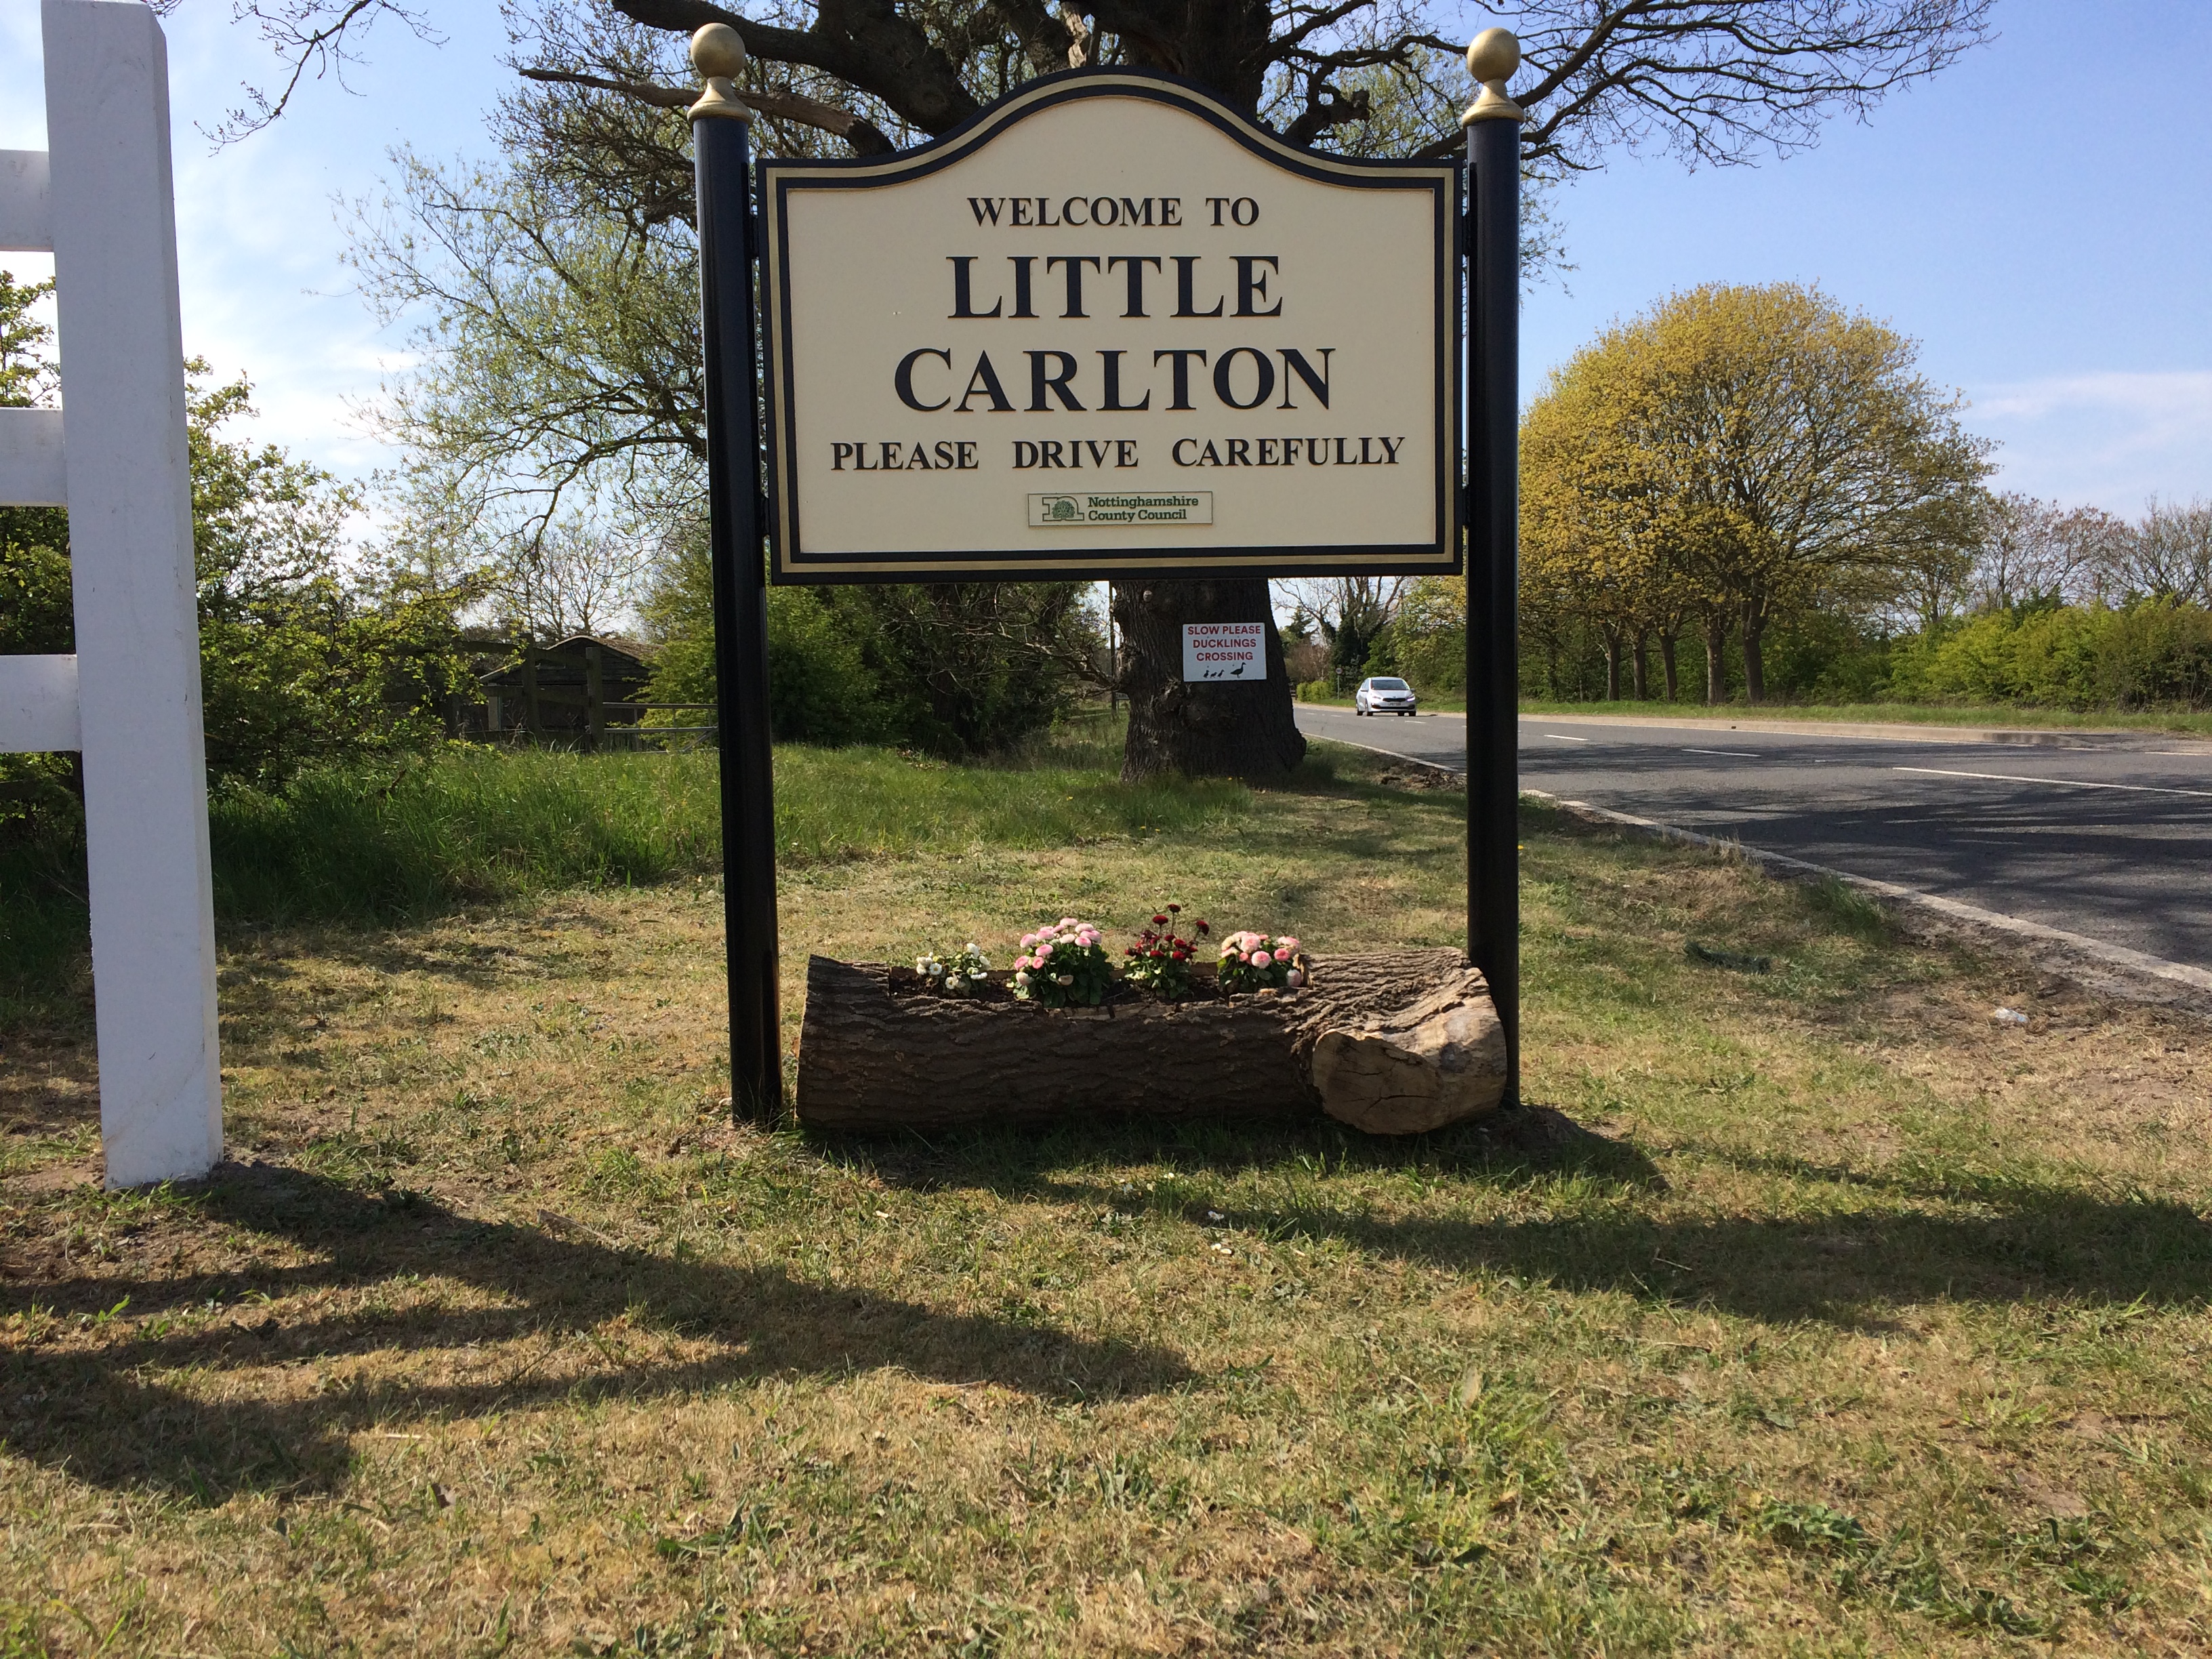 Little Carlton, Nottinghamshire